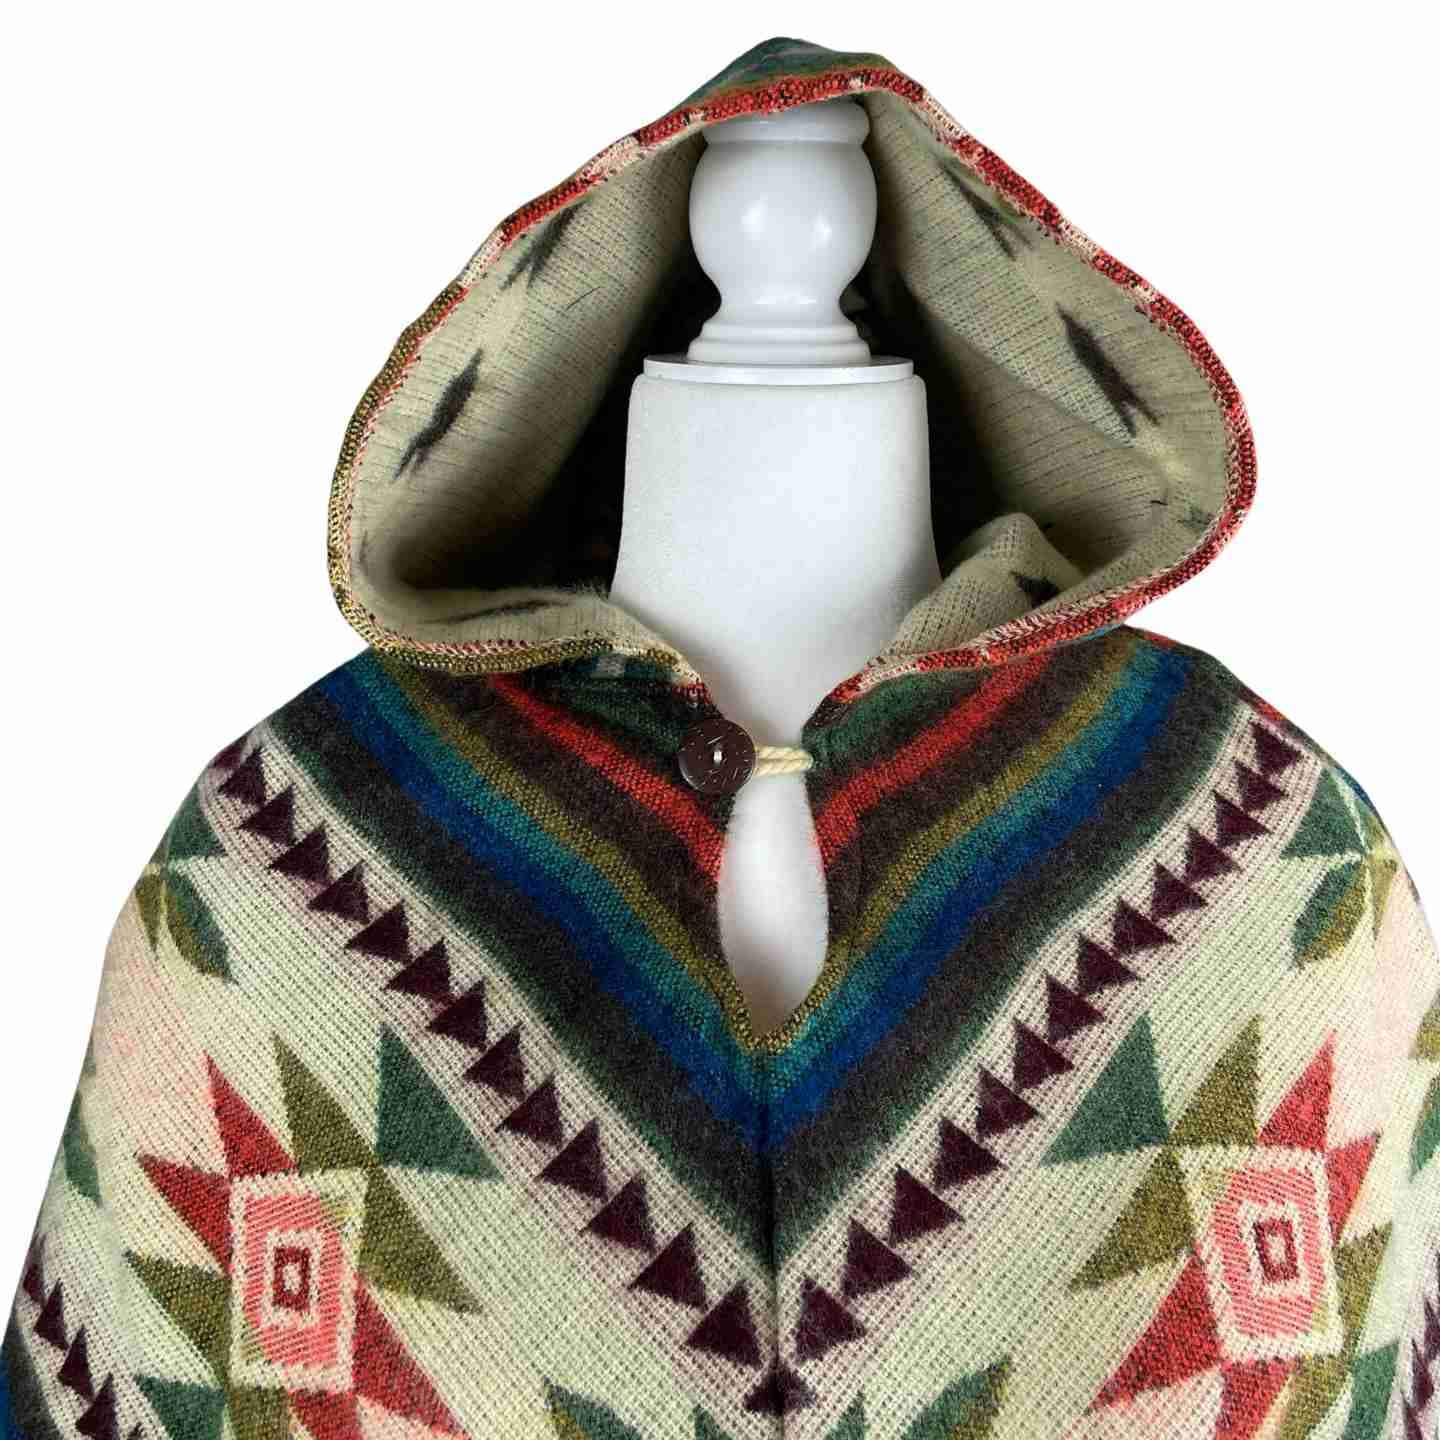 Warm Hippie-inspired Woolen Hooded Poncho - Lightweight Soft Winter Outerwear for Women, Beige Green V Style Cape with Light Blue Tassels